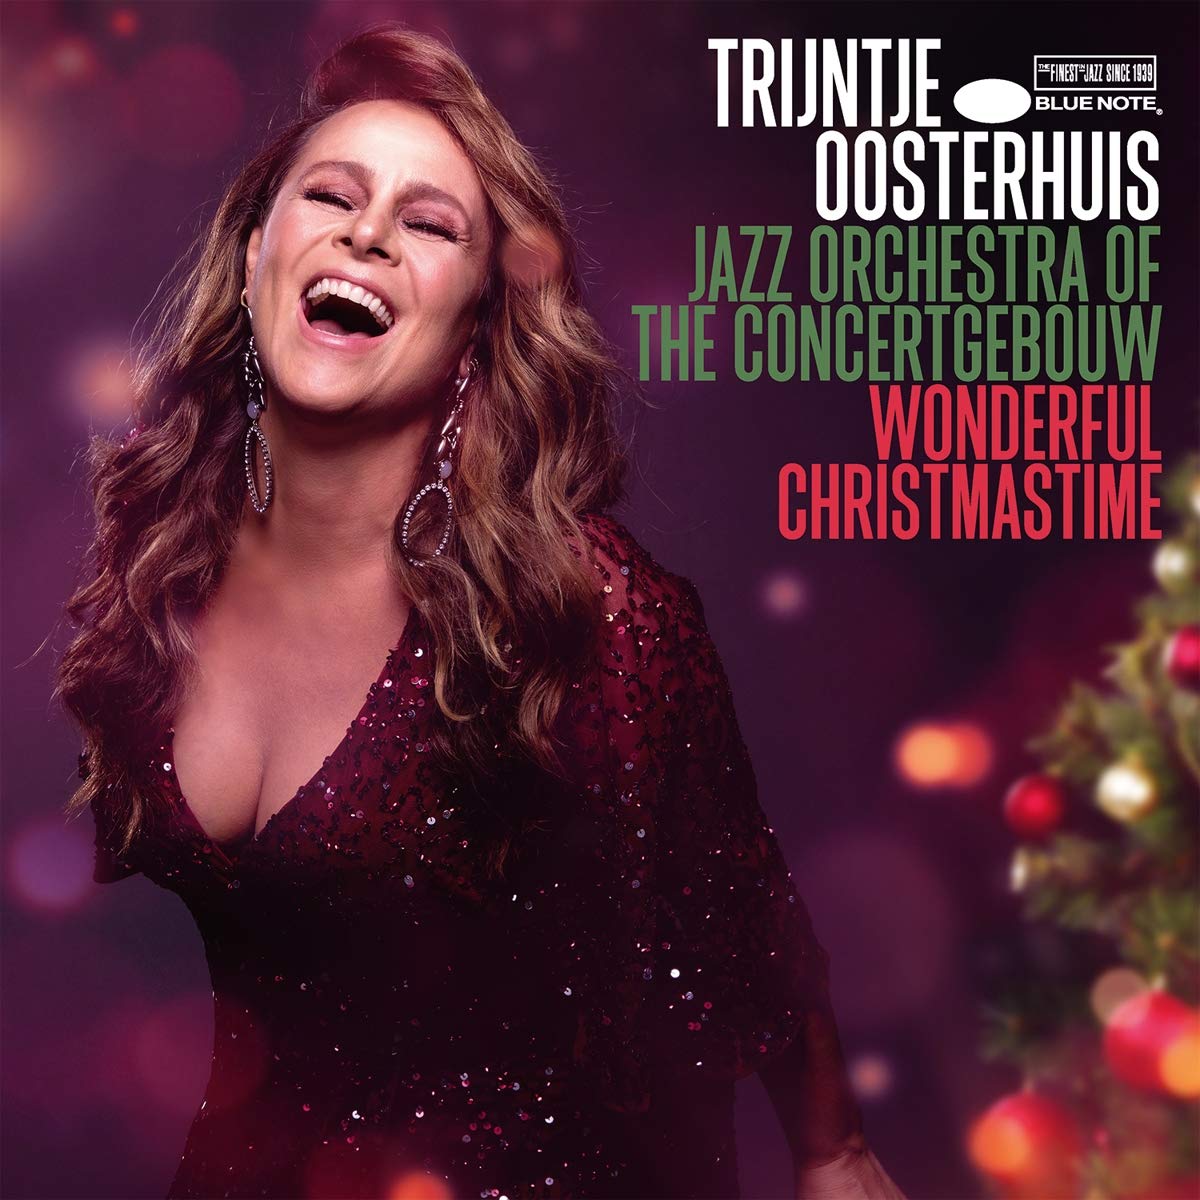 Trijntje Oosterhuis - Wonderful Christmastime 2020 [MP3+FLAC]